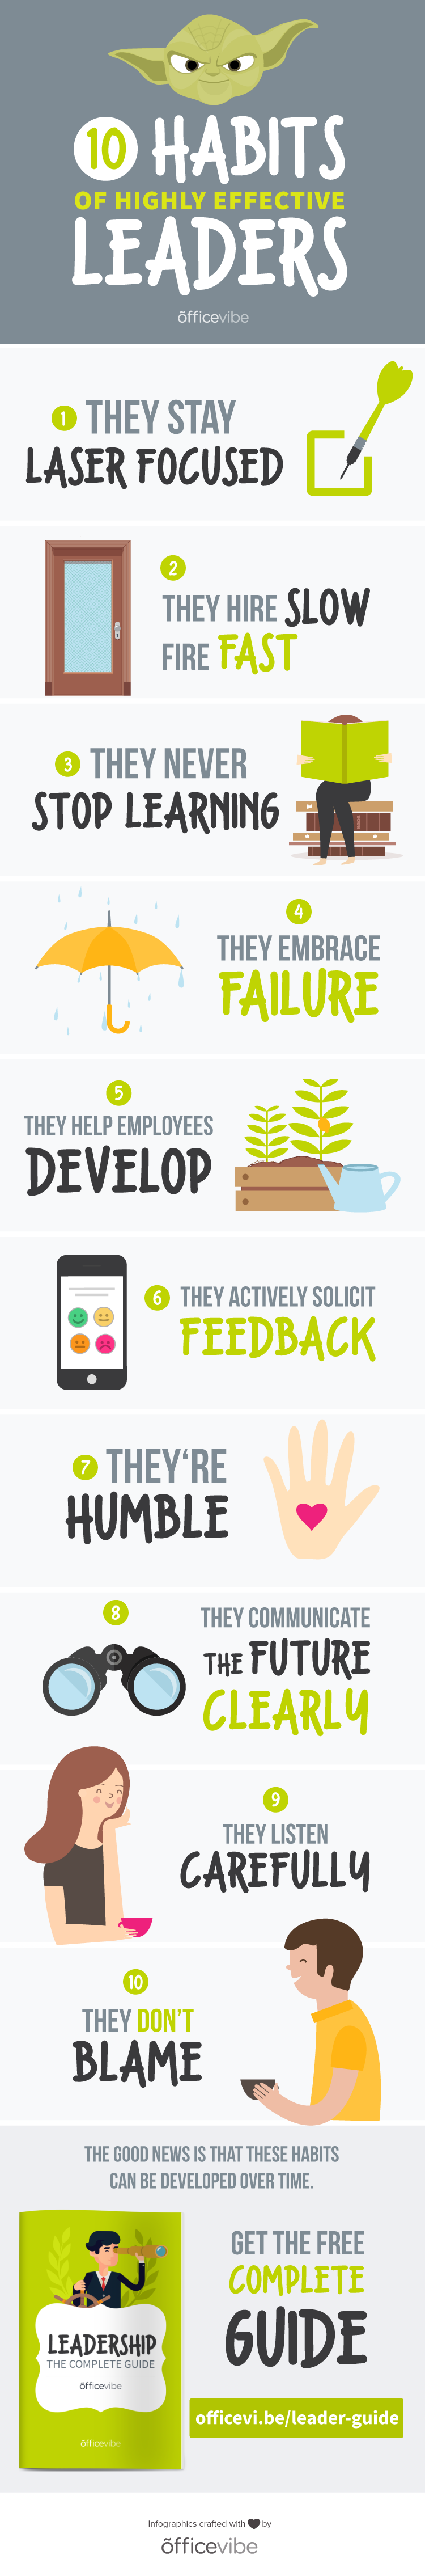 infographic-habits-effective-leaders